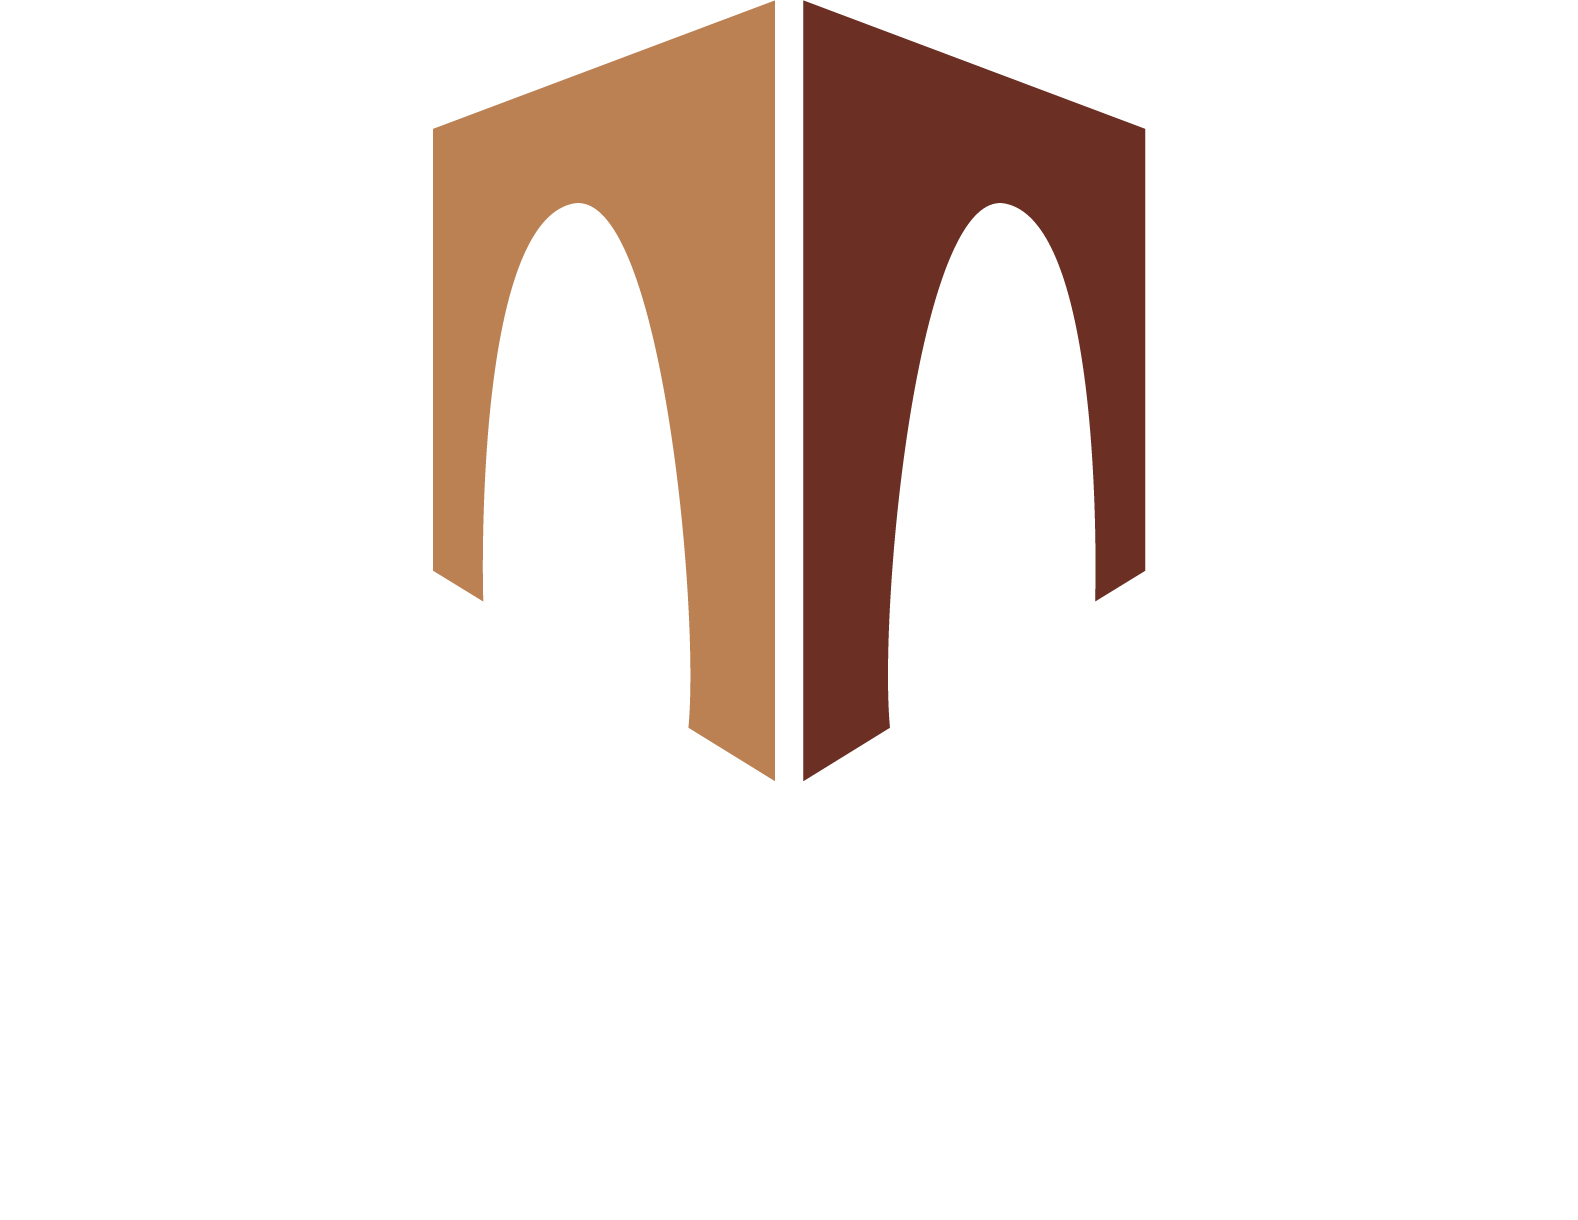 The Wood Light